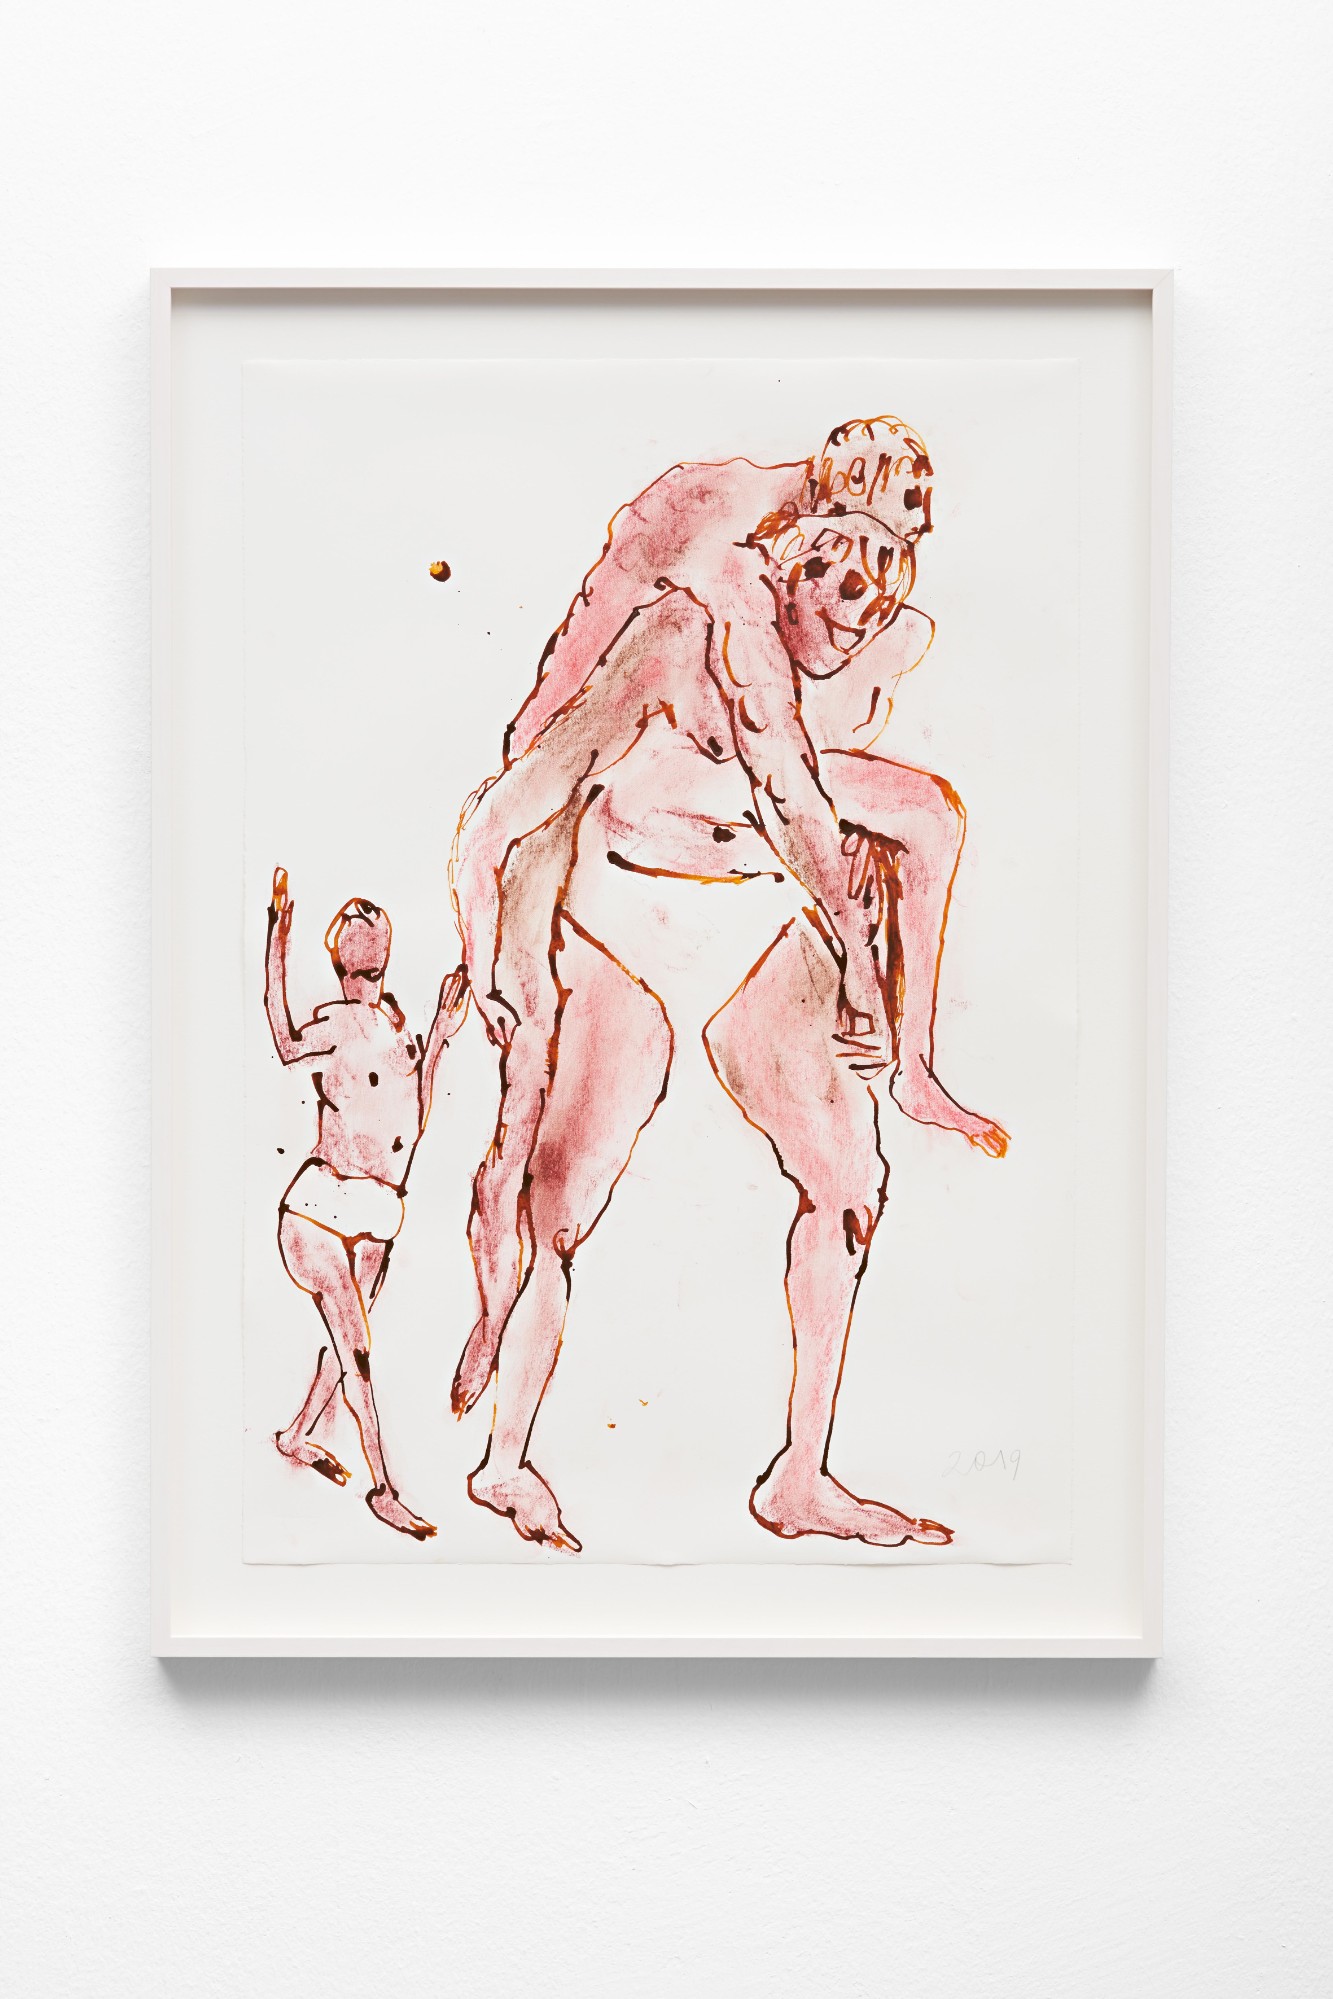 Josef Zekoff, Aeneasgruppe, 2019, pastel, ink on paper, 53 x 76 cm